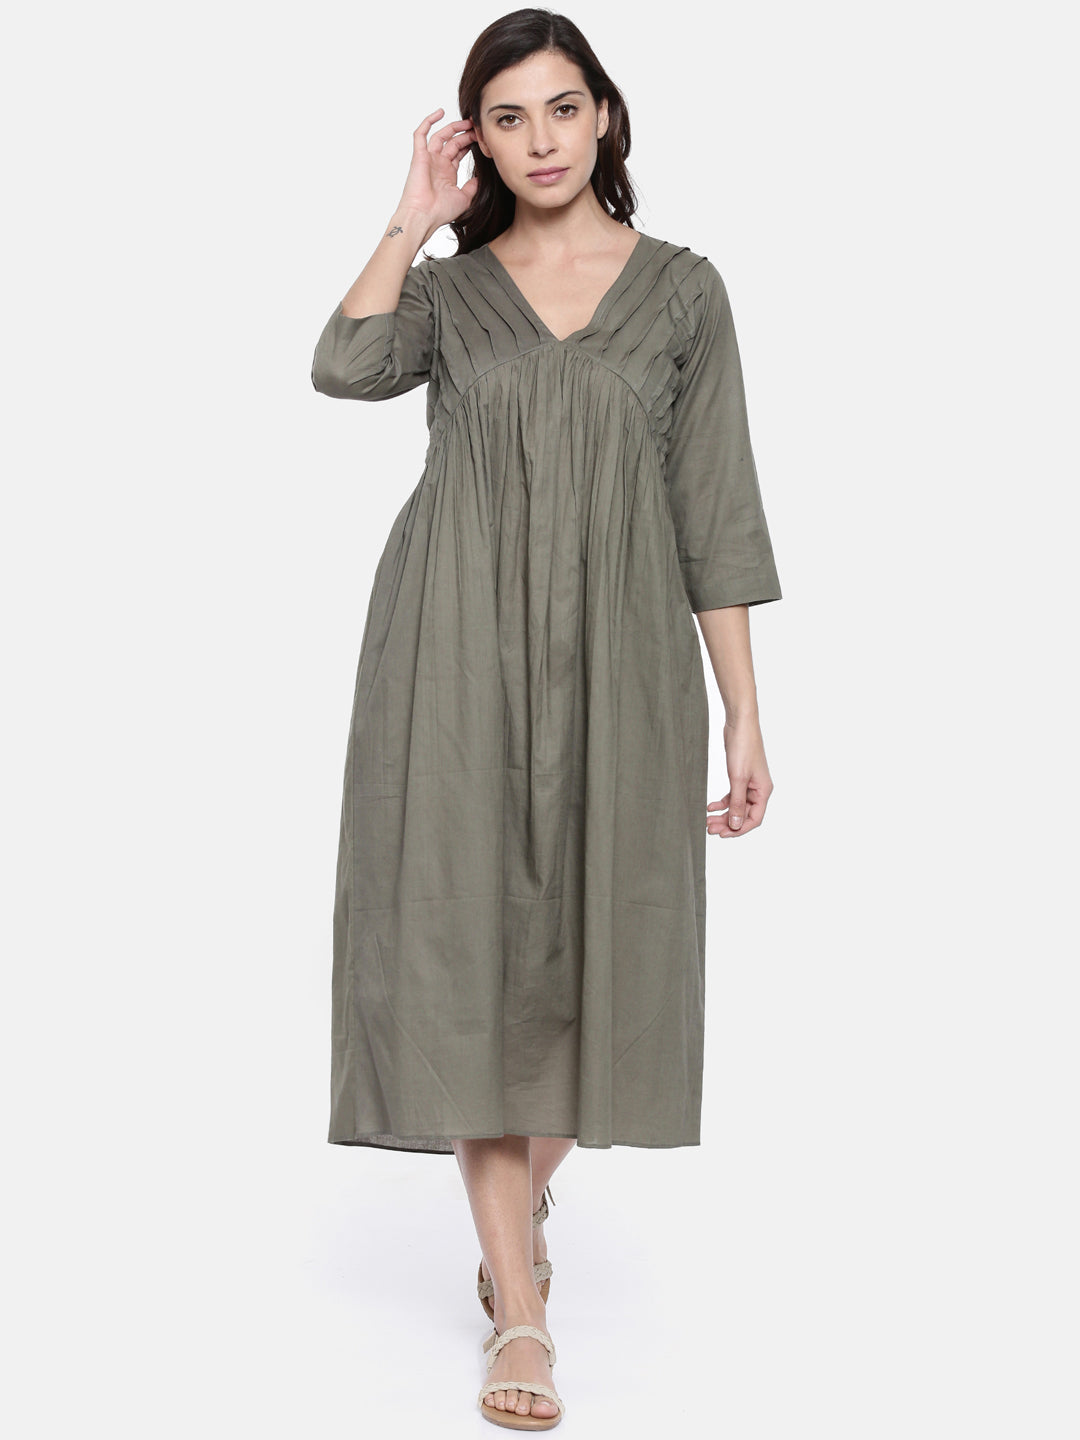 Grey Pleated Cotton Dress  - AS0207 - Asmi Shop